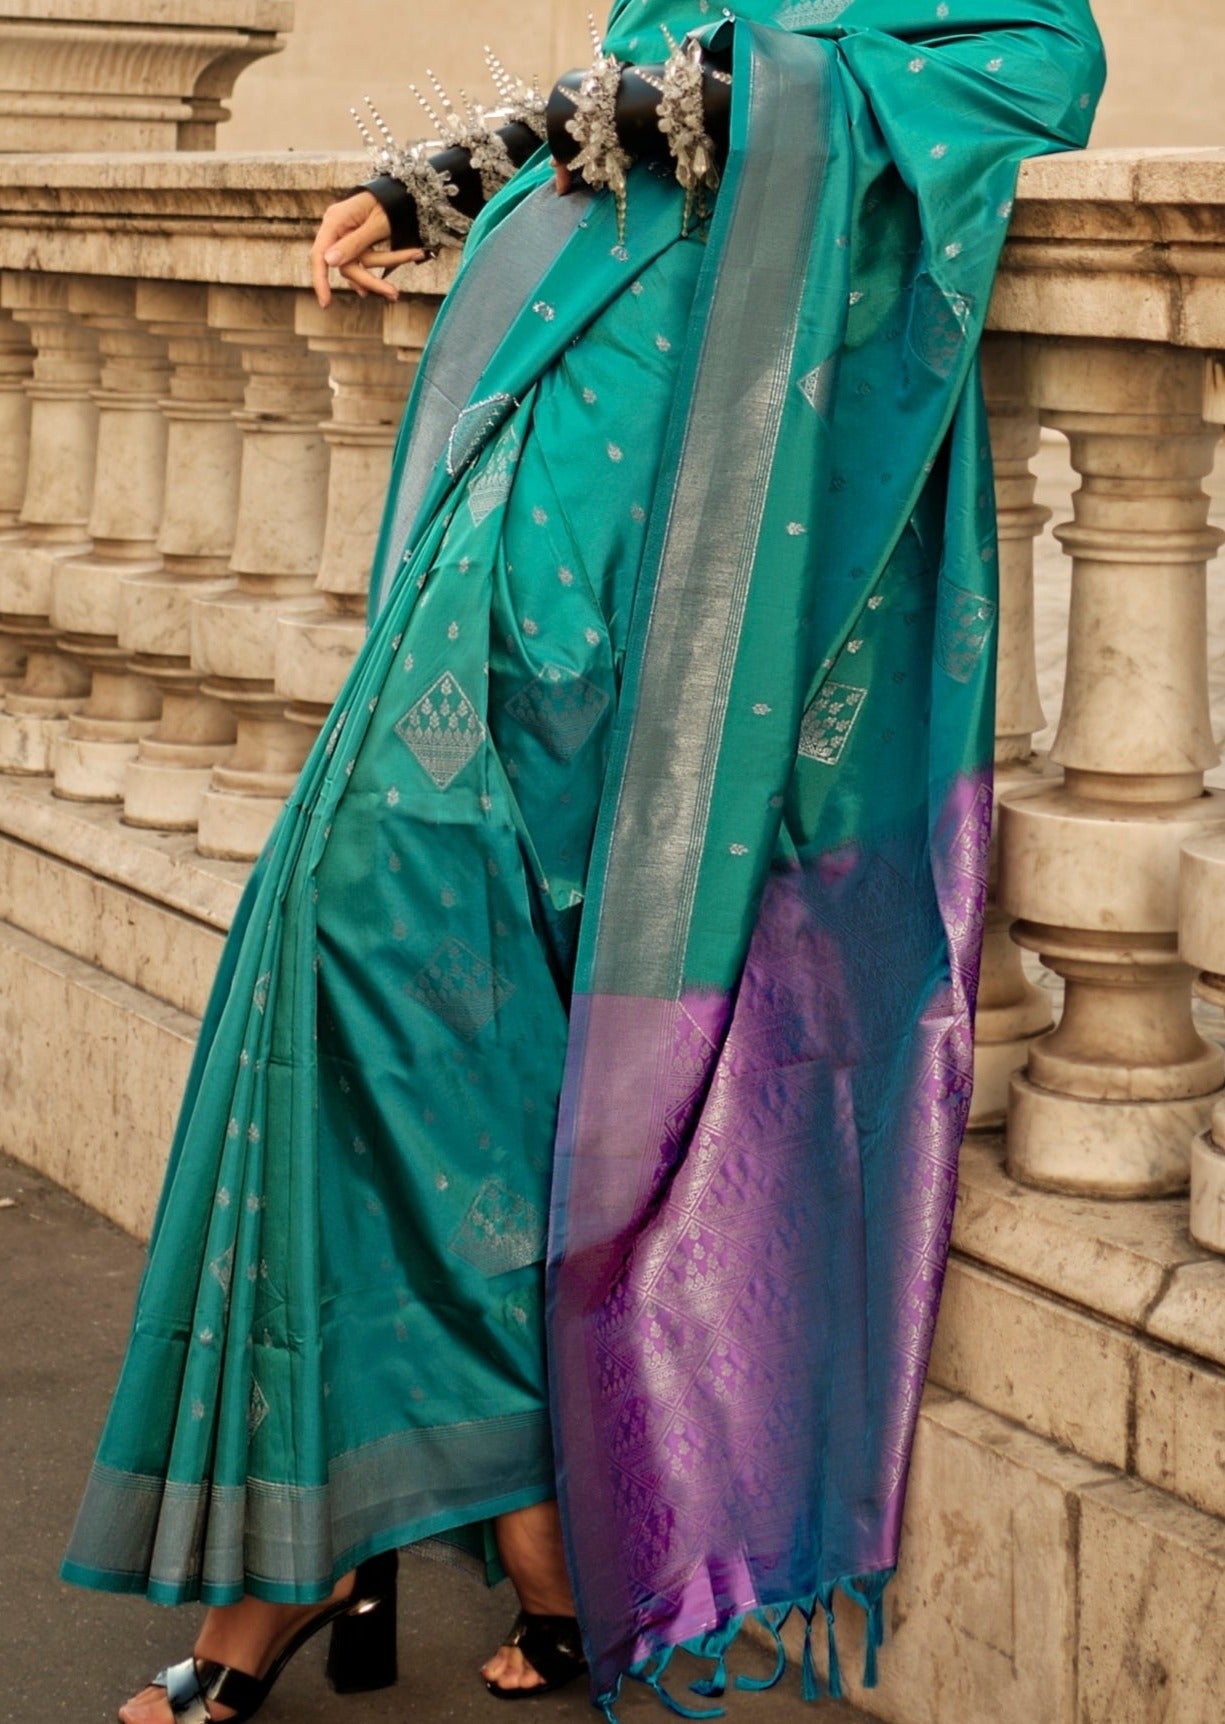 Handloom kanjivaram soft silk green saree online shopping price for wedding usa.